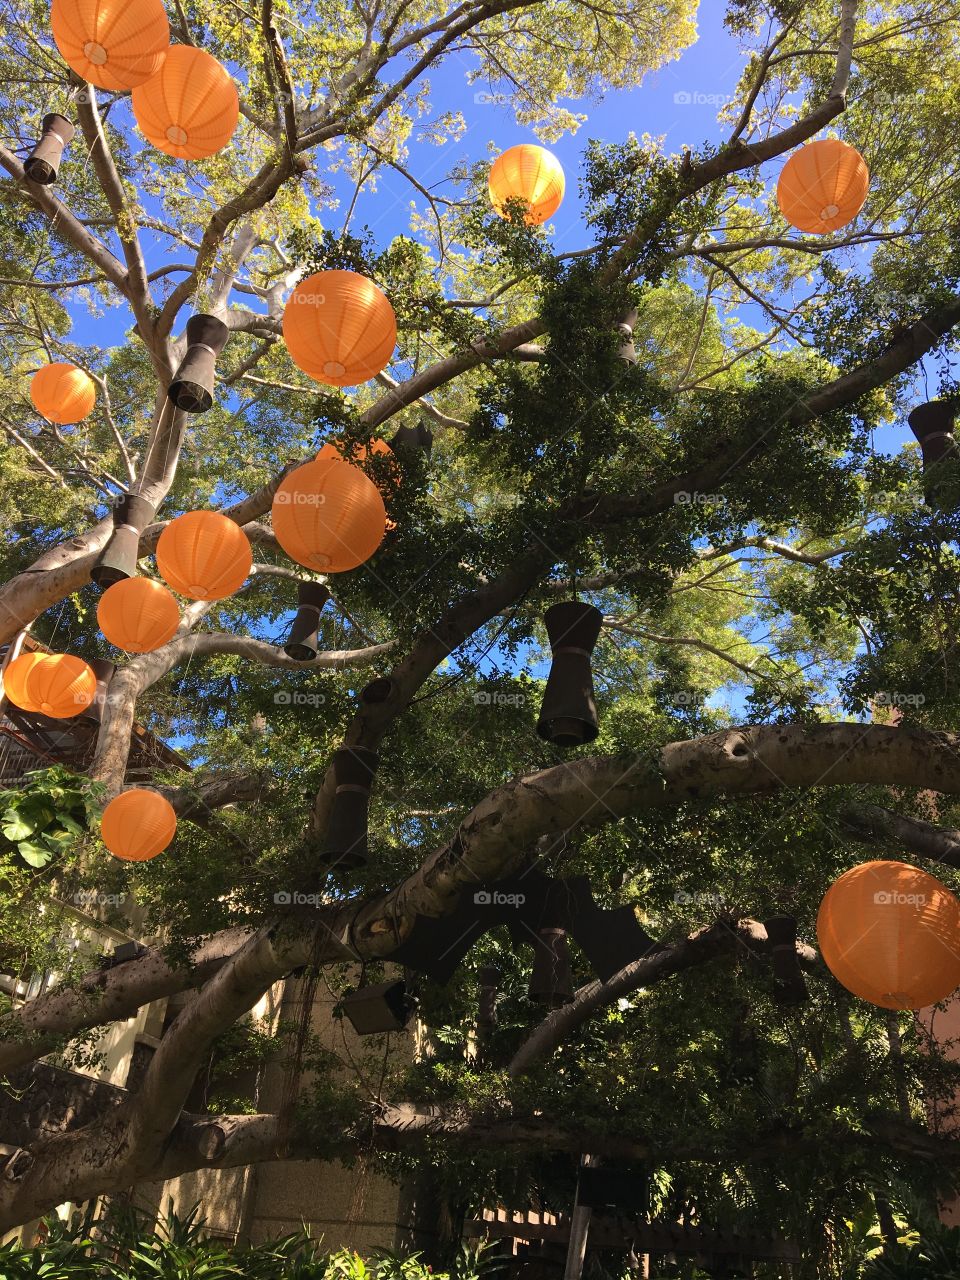 Orange lanterns in a tree